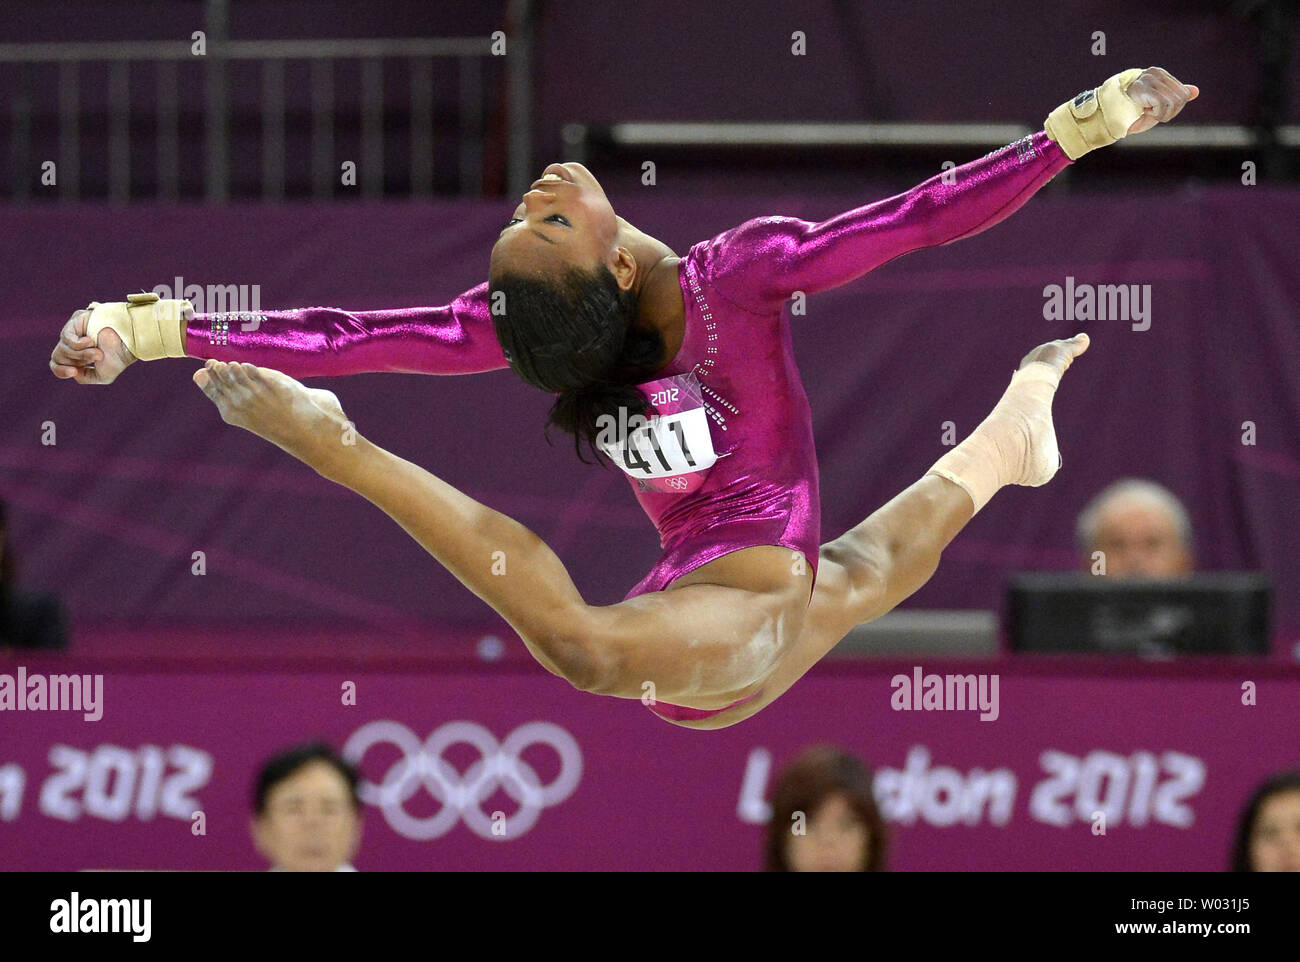 American Gymnast Gabrielle Douglas Is Airborne As She Goes Through